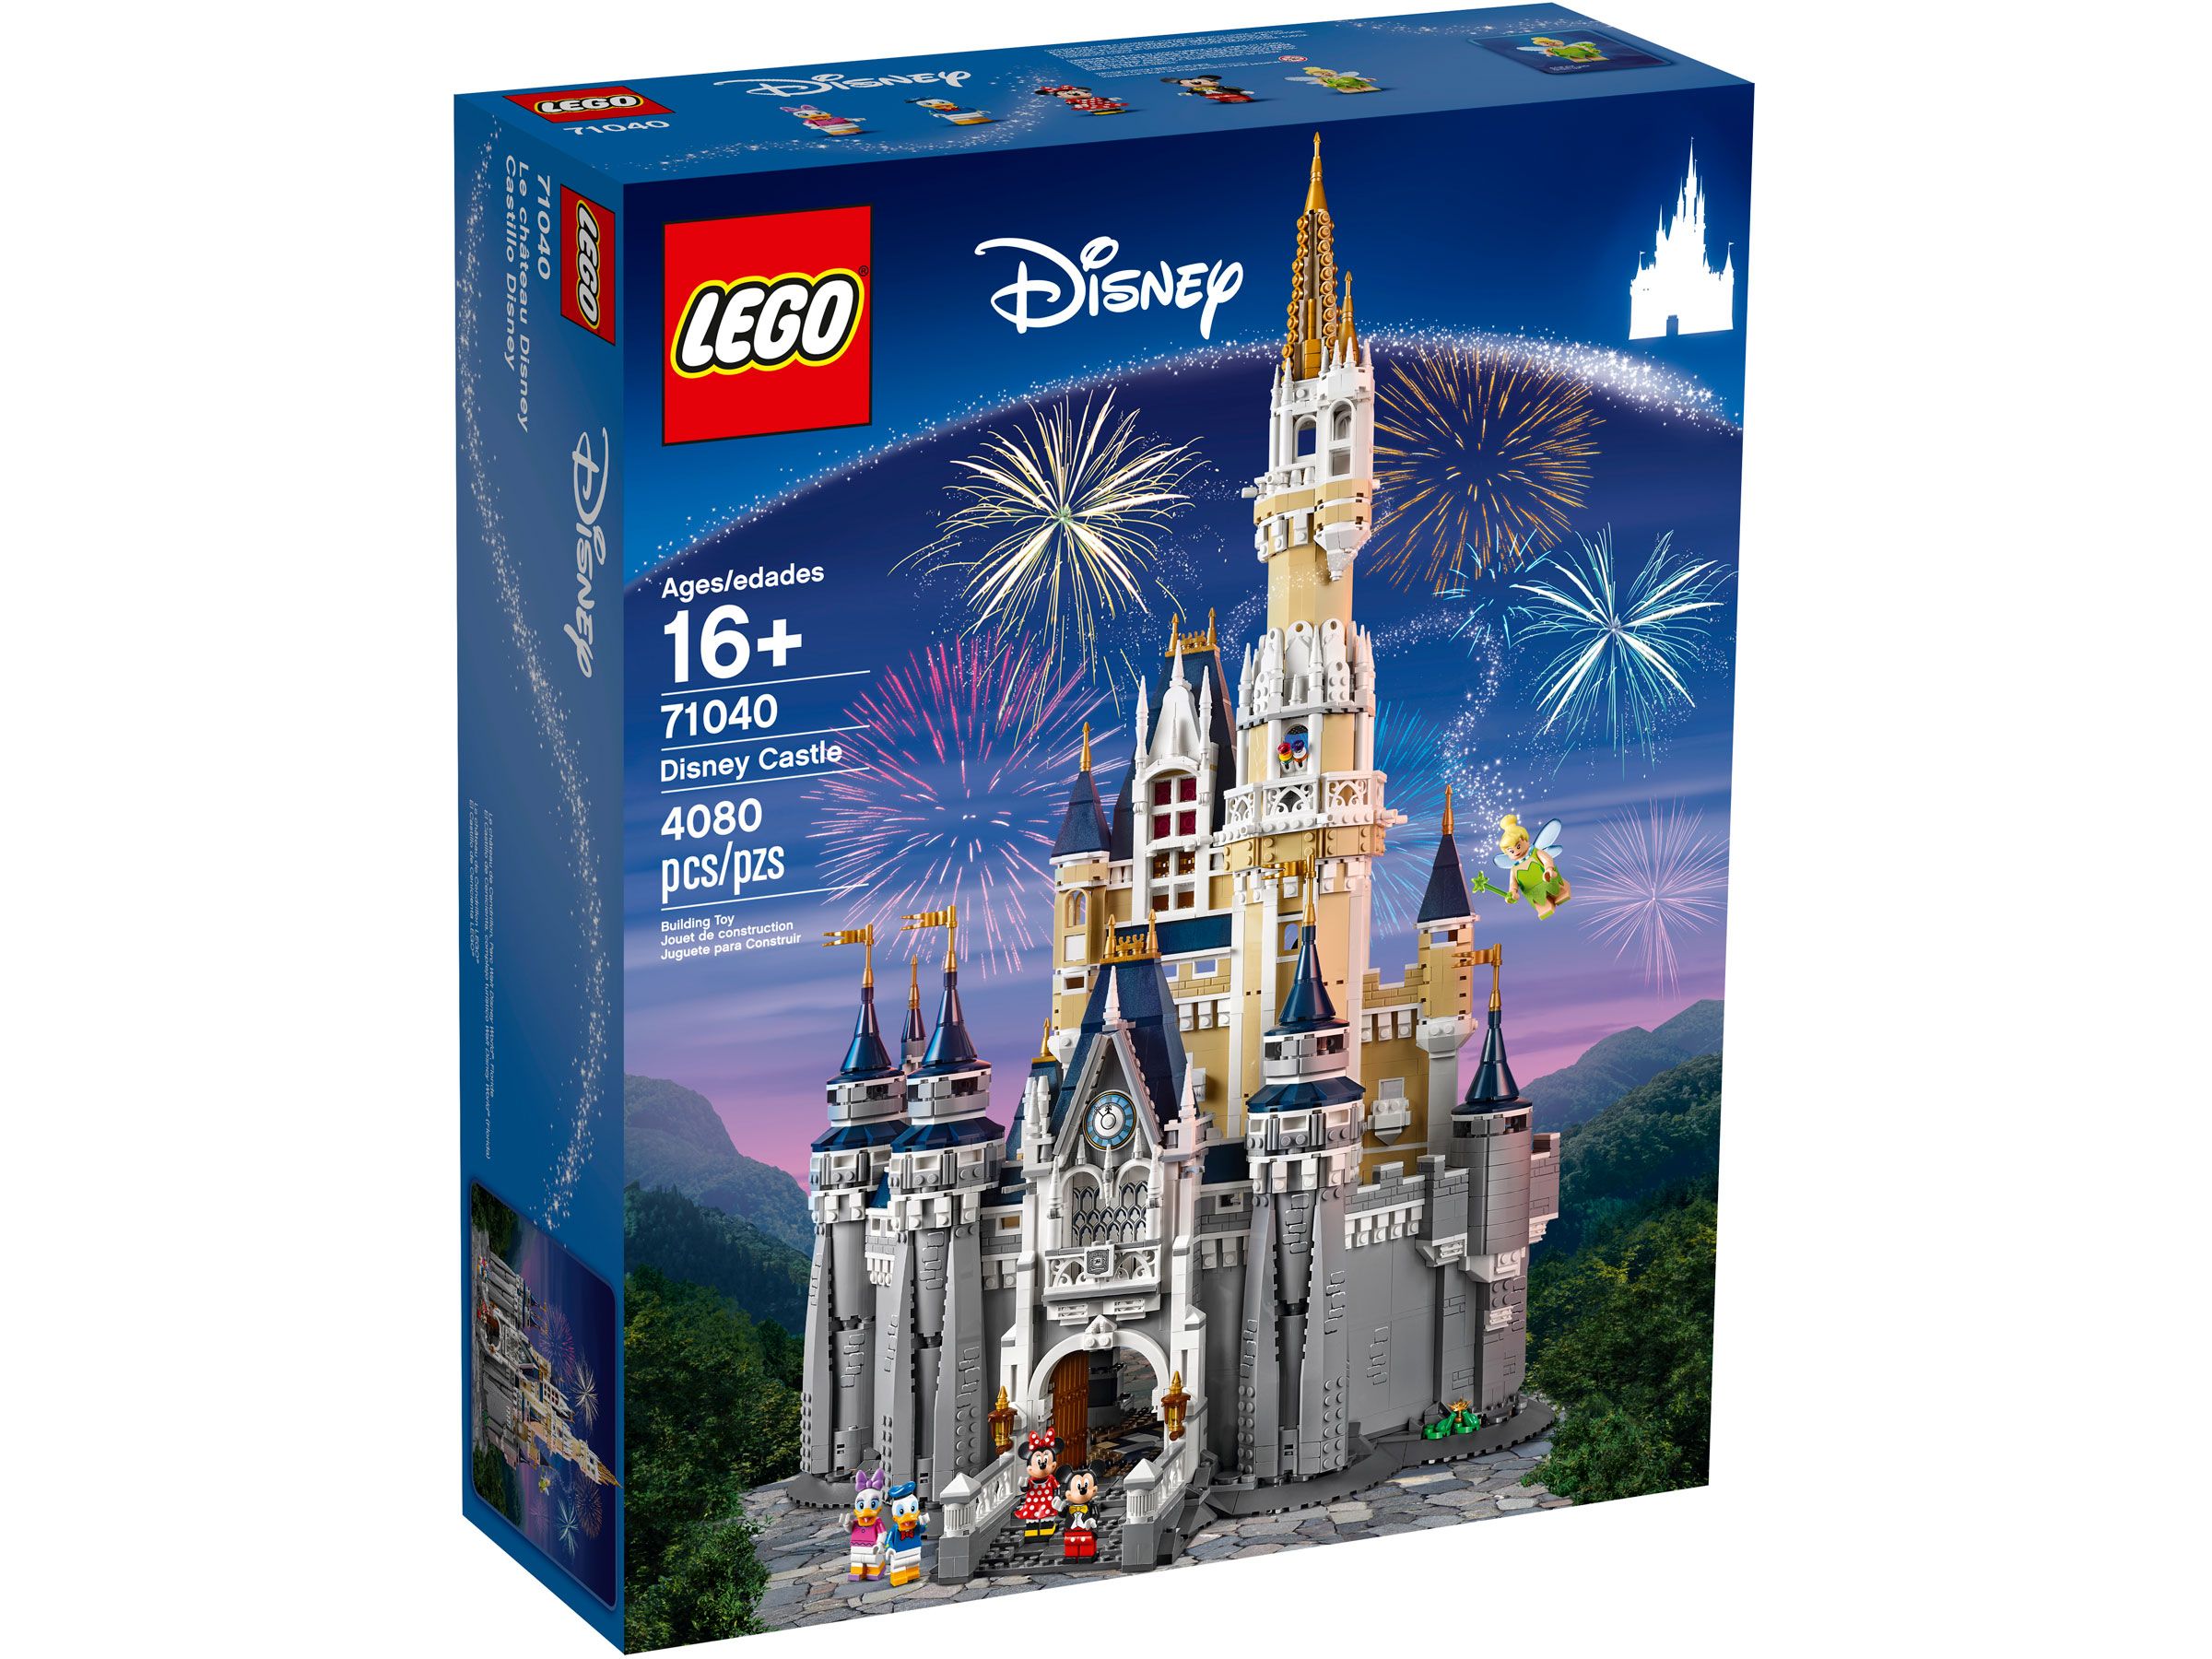 LEGO Advanced Models 71040 Das Disney Schloss LEGO_71040_Box1_v39.jpg